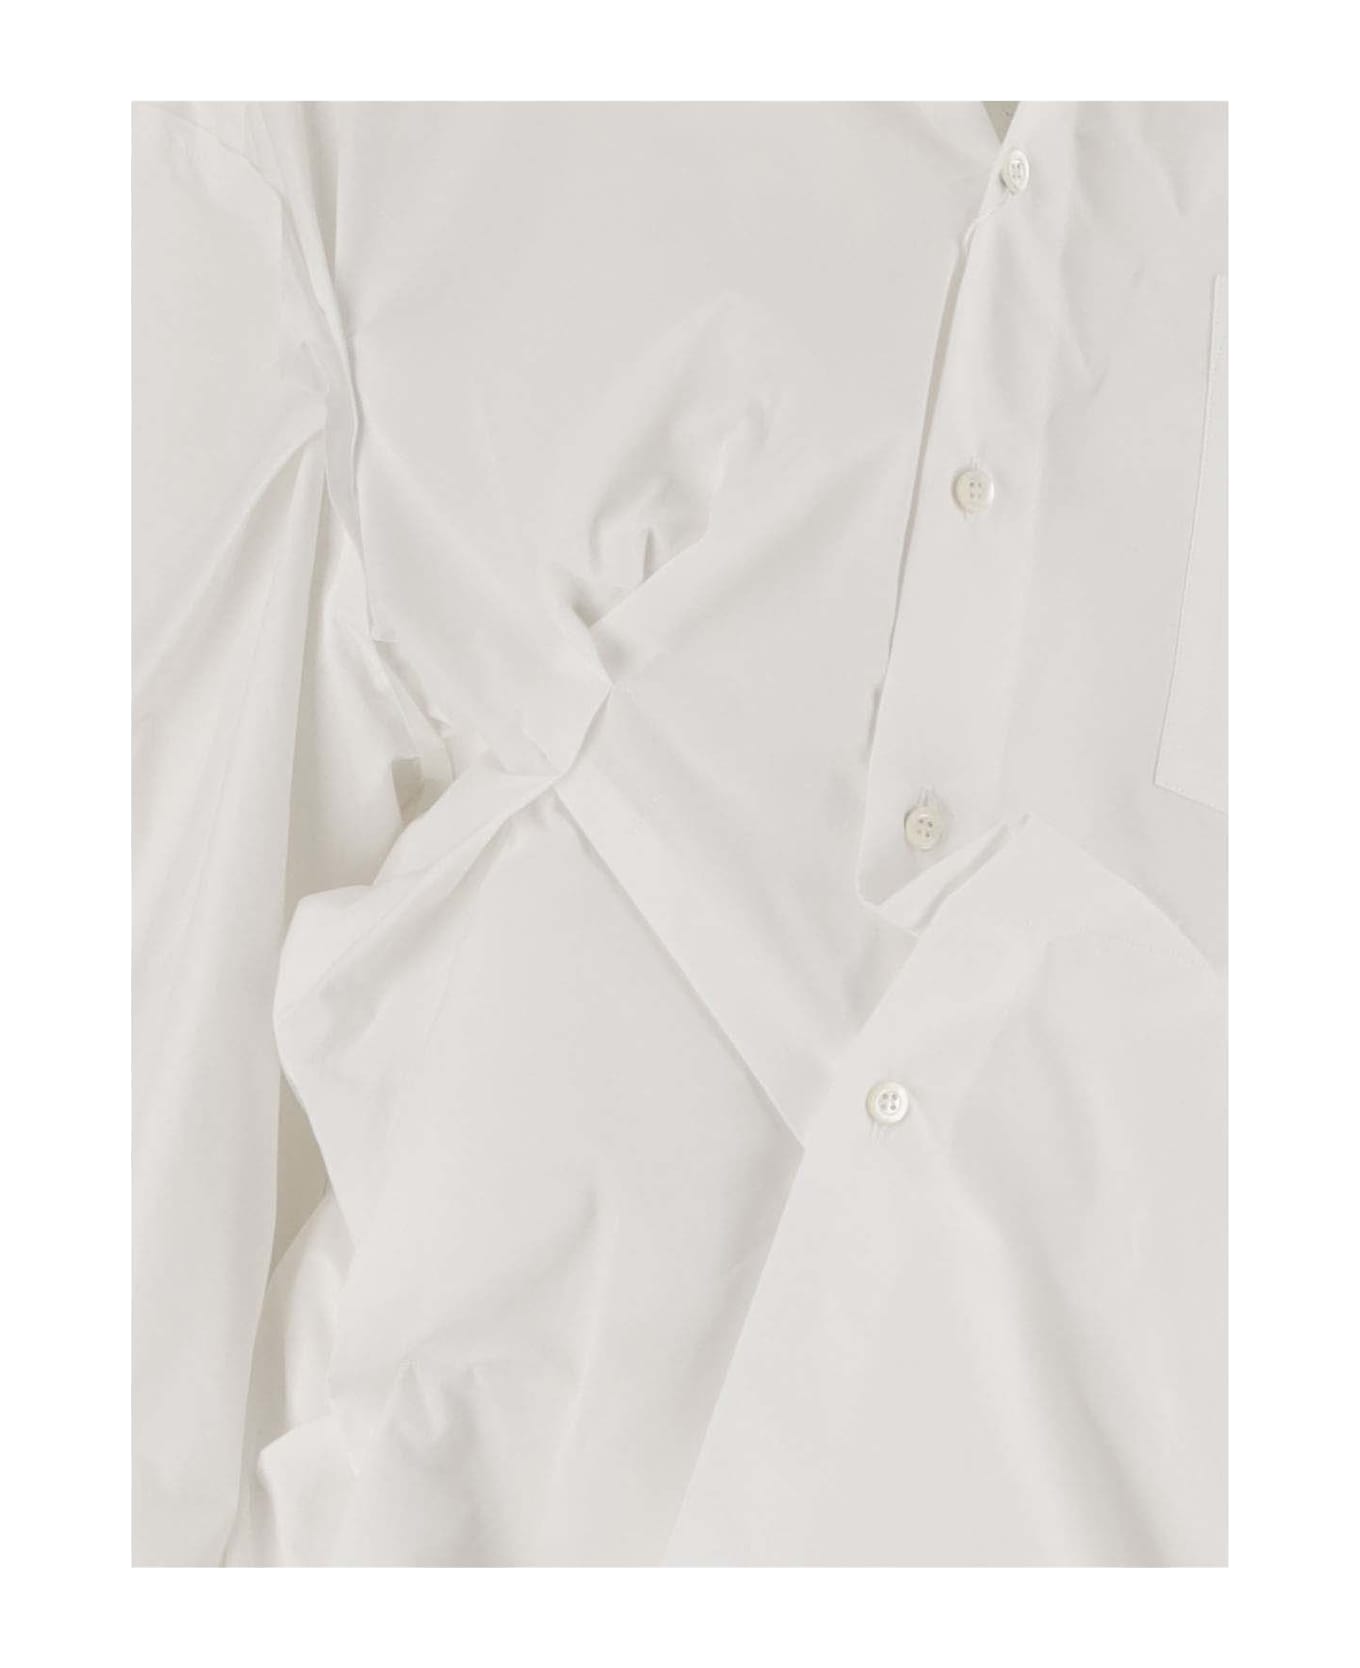 Maison Margiela Cotton Shirt - White